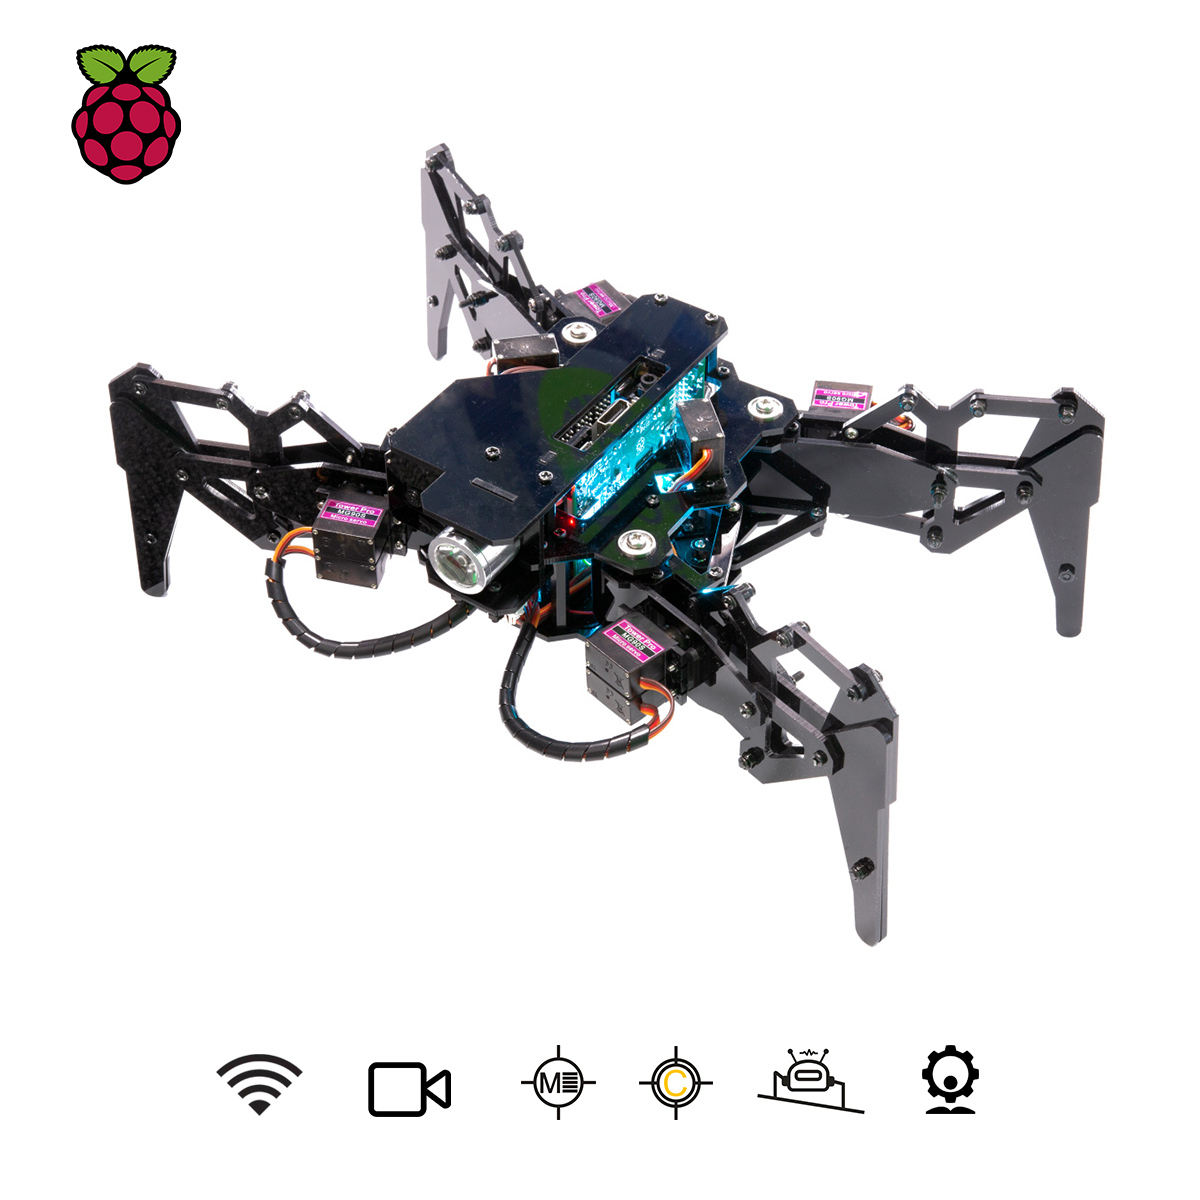 Adeept DarkPaw Bionic Quadruped Spider Robot Kit for Raspberry Pi 4/3 Model B+/B/2B, STEM Crawling Robot, OpenCV Tracking, Self-stabilizing